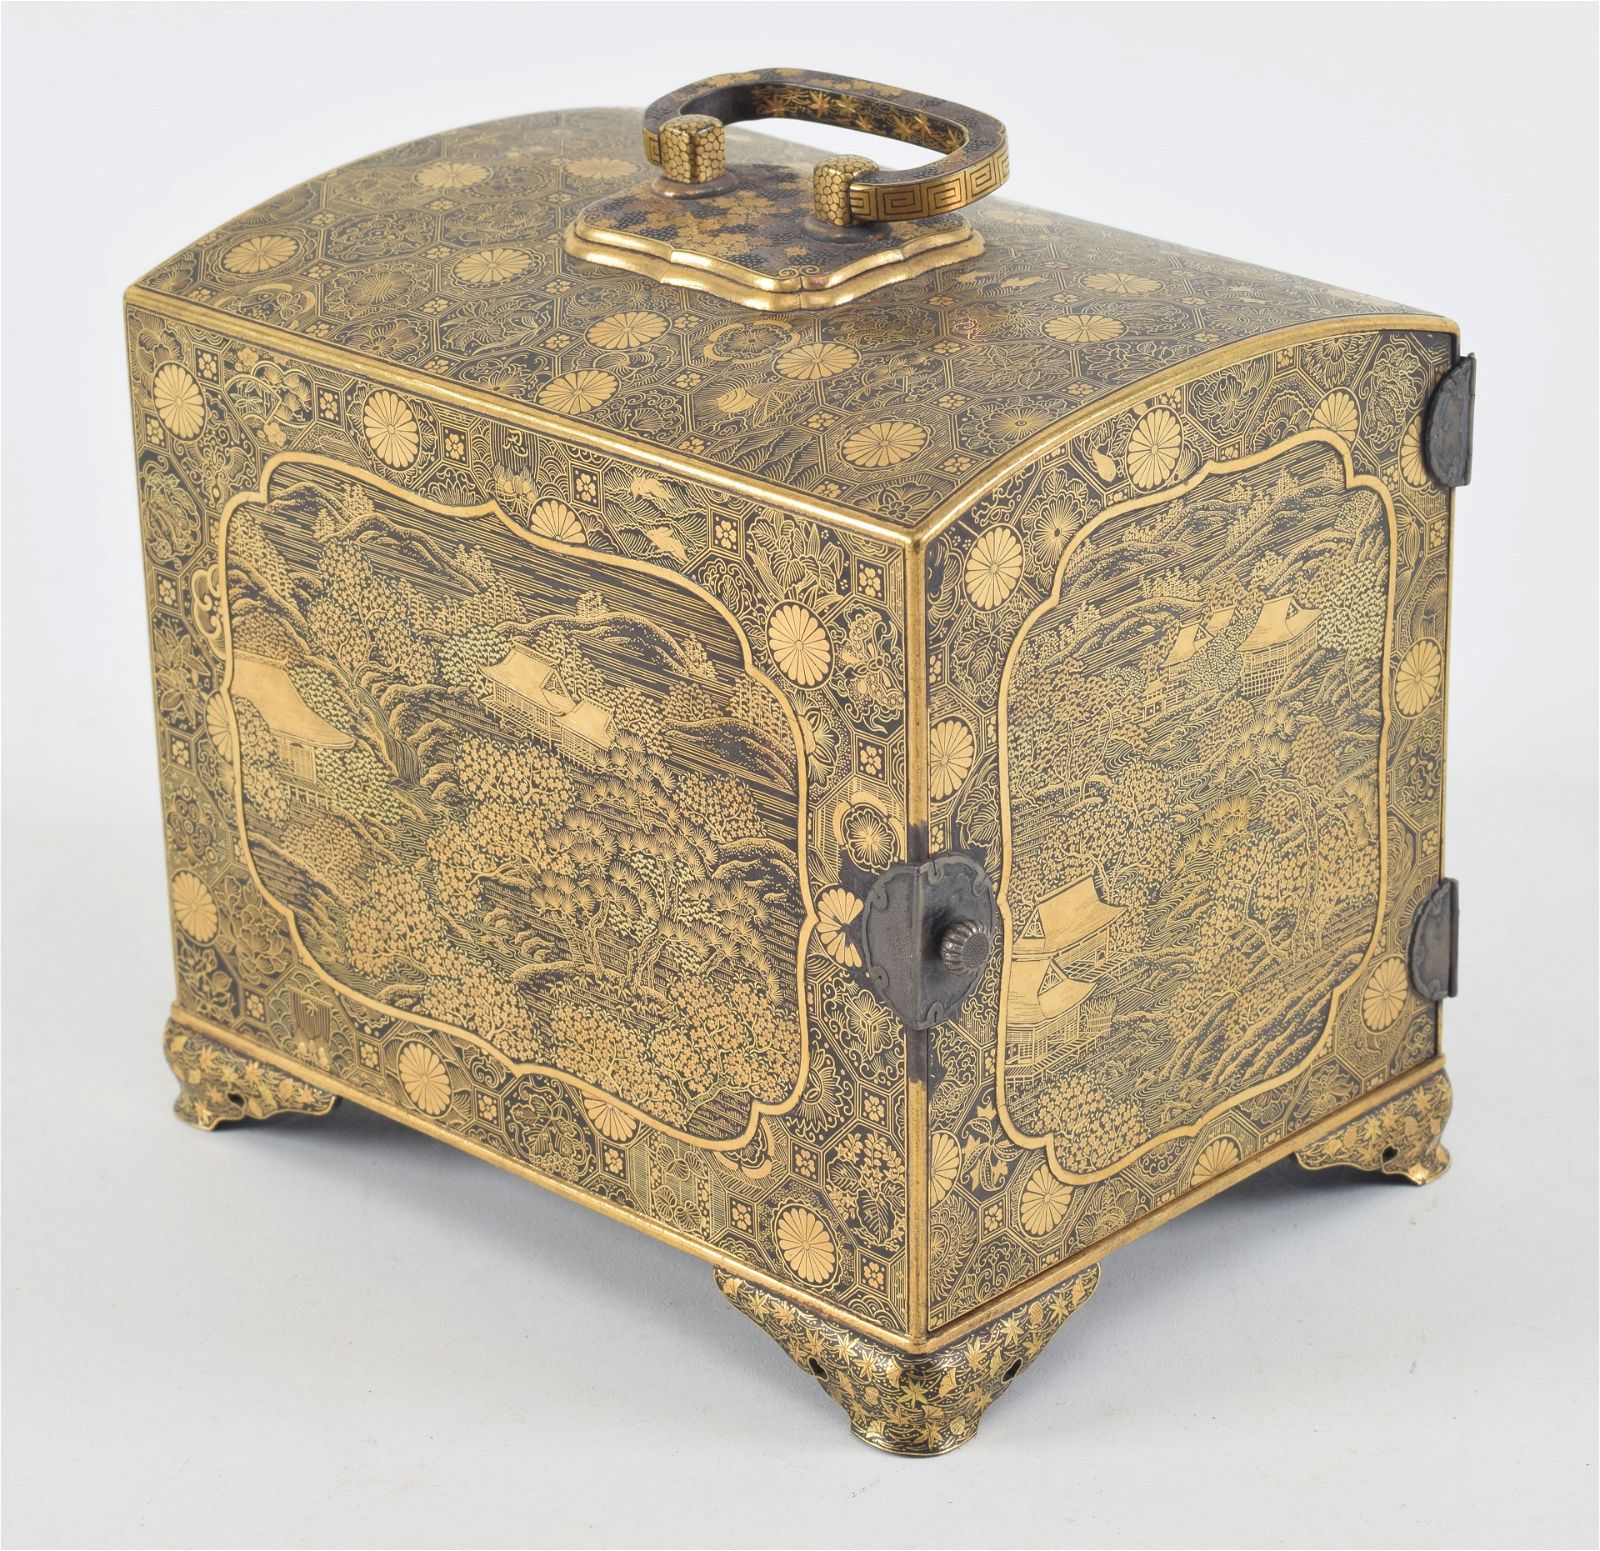 Japanese Meiji-era damascene box signed by Komai leads our five auction highlights